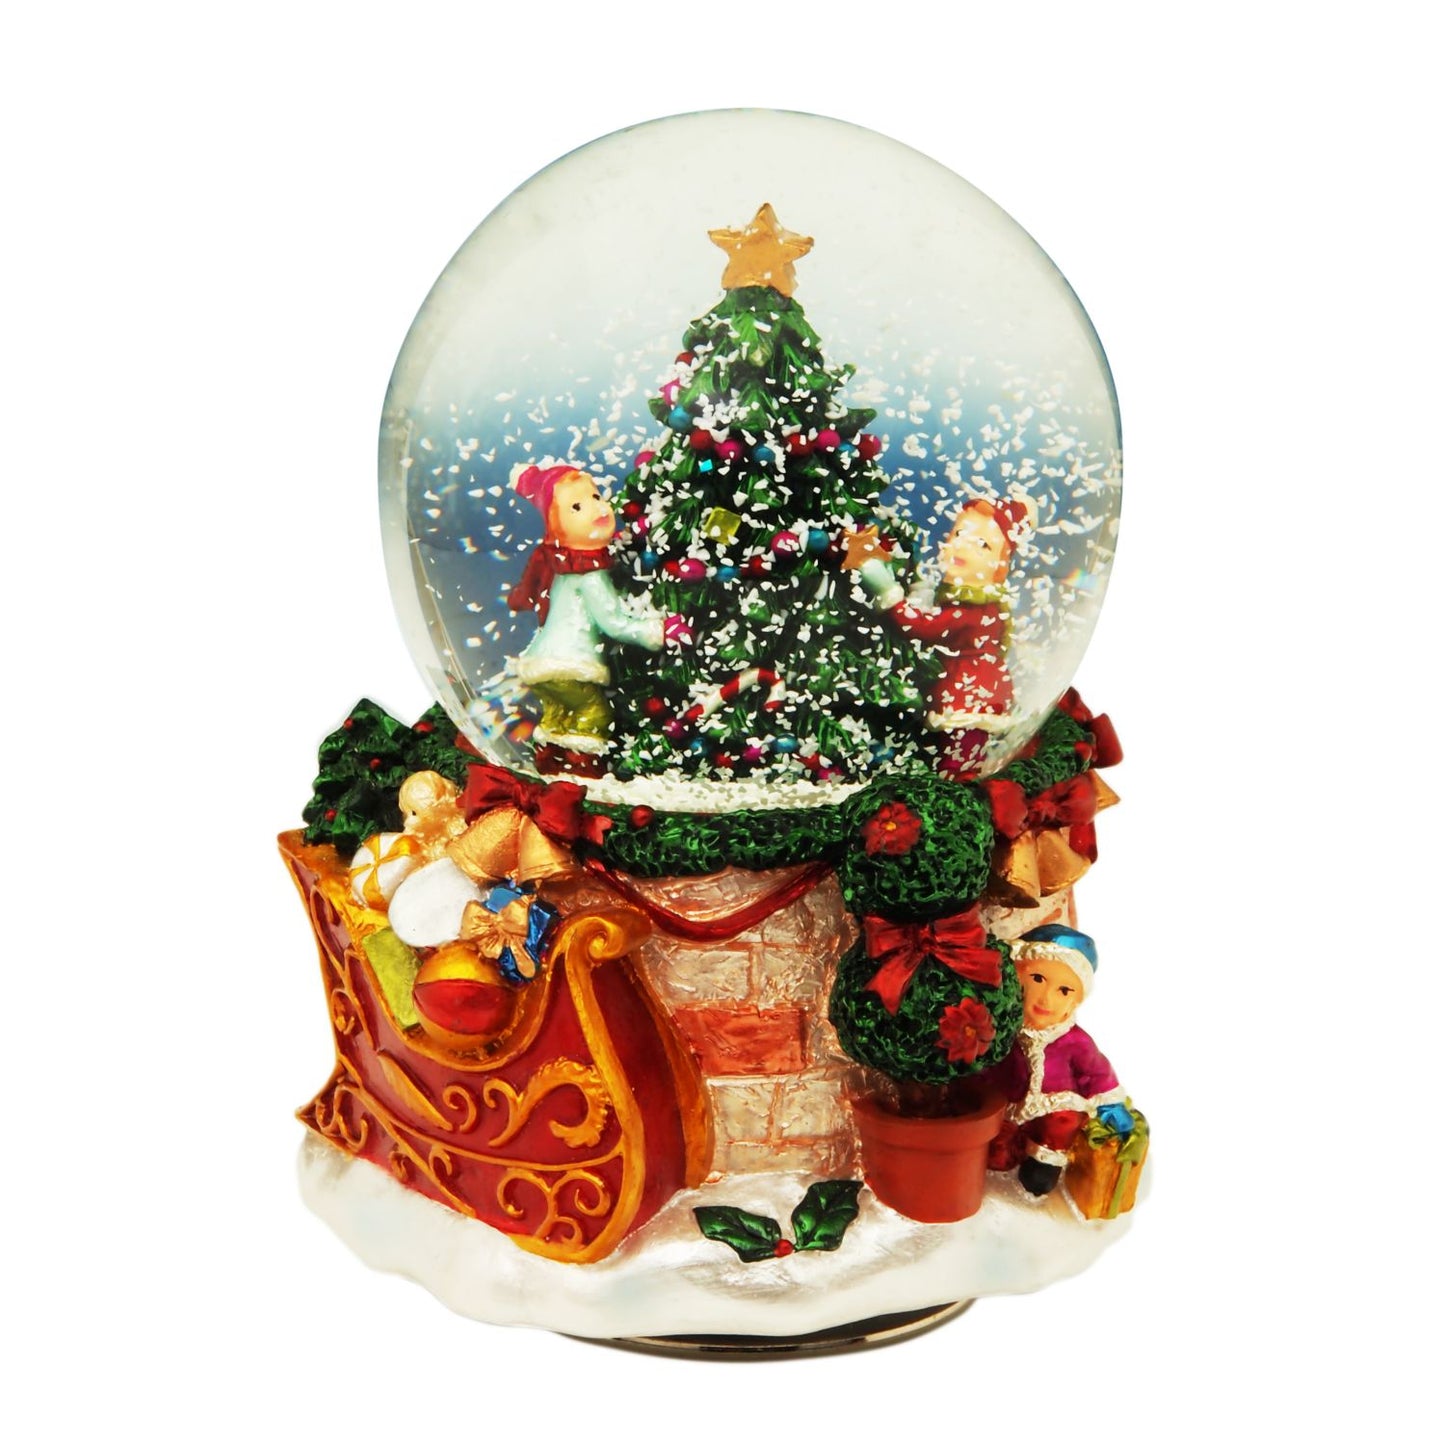 Musicbox Kingdom 3.1" Snow Globe With Christmas Tree Plays“O Christmas Tree”